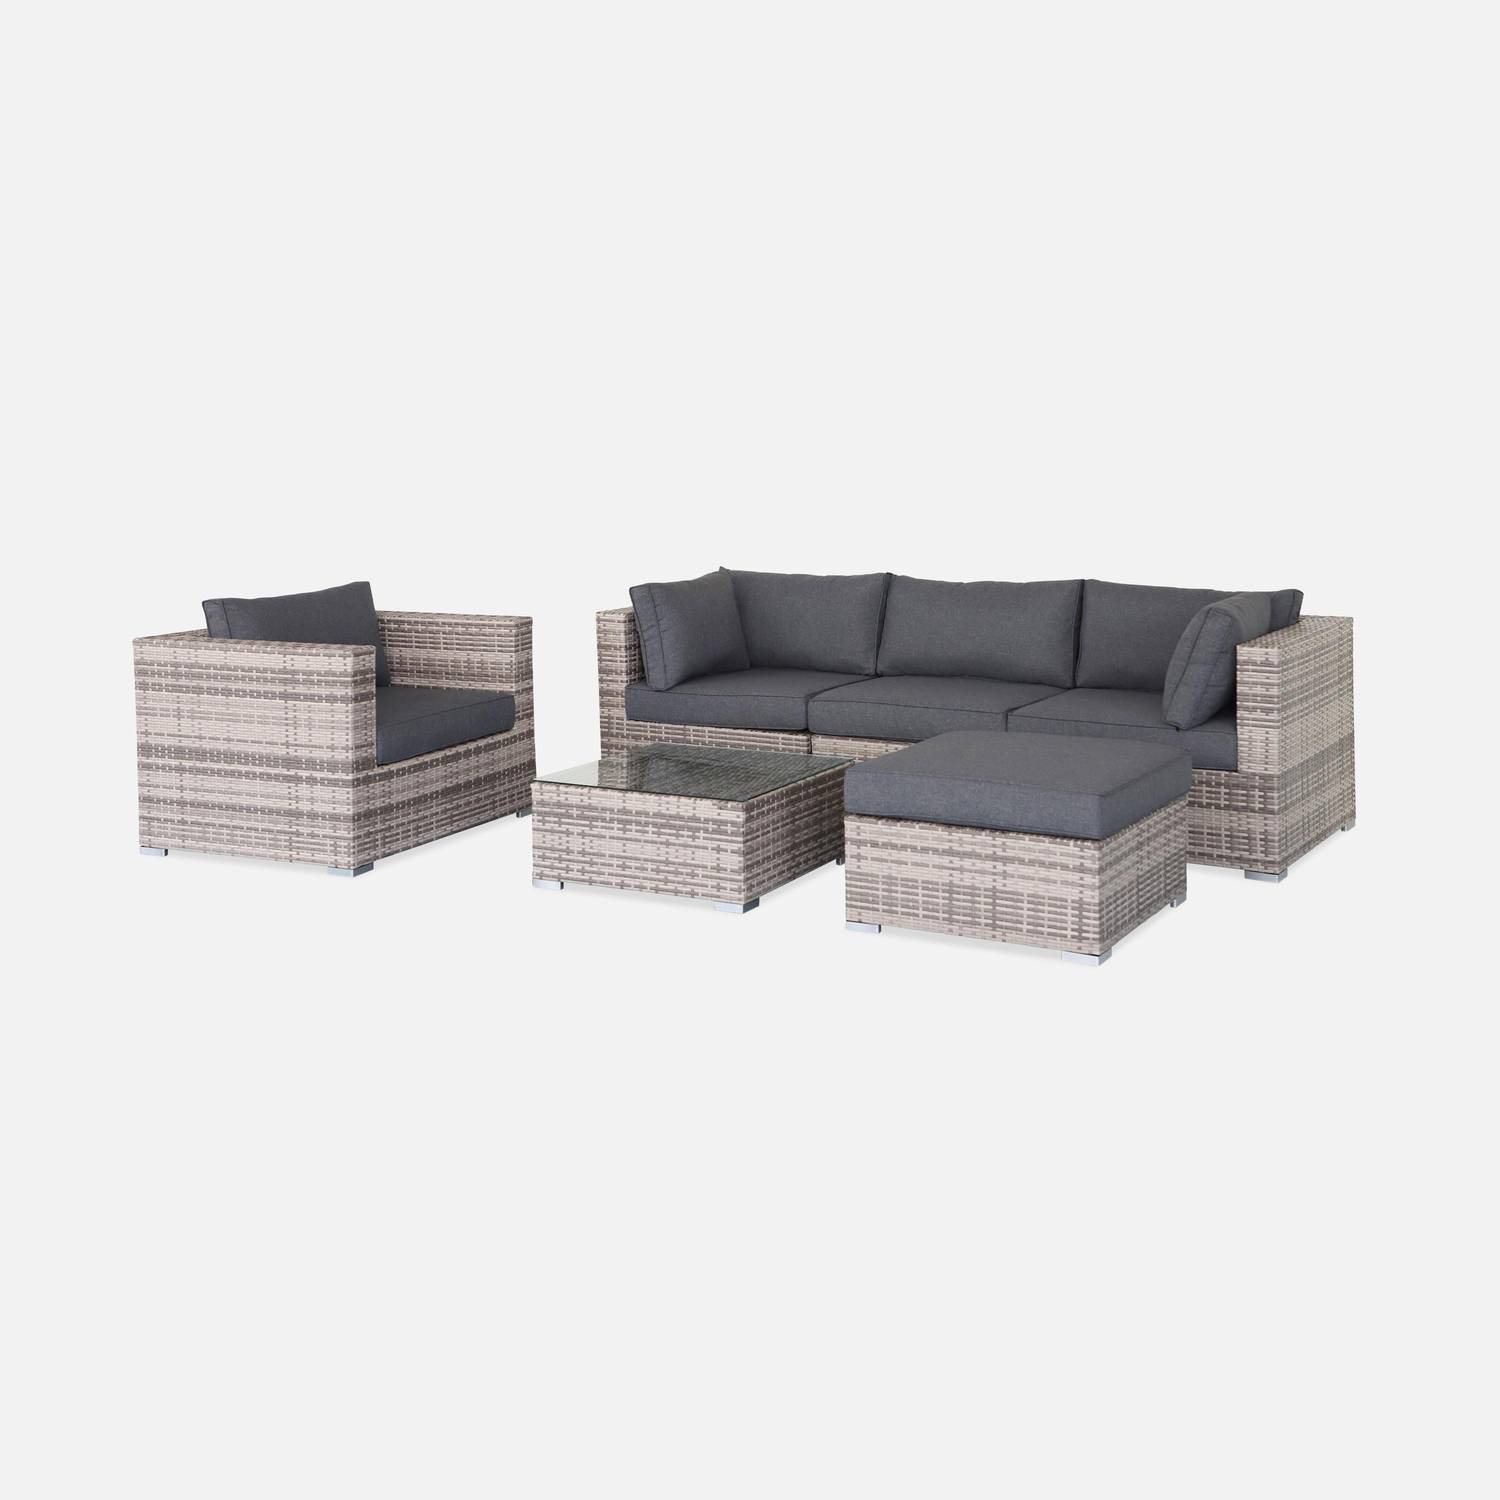 Ready assembled 5-seater polyrattan garden sofa set - sofa, armchair, coffee table - Caligari - Mixed Grey rattan, Grey cushions Photo1